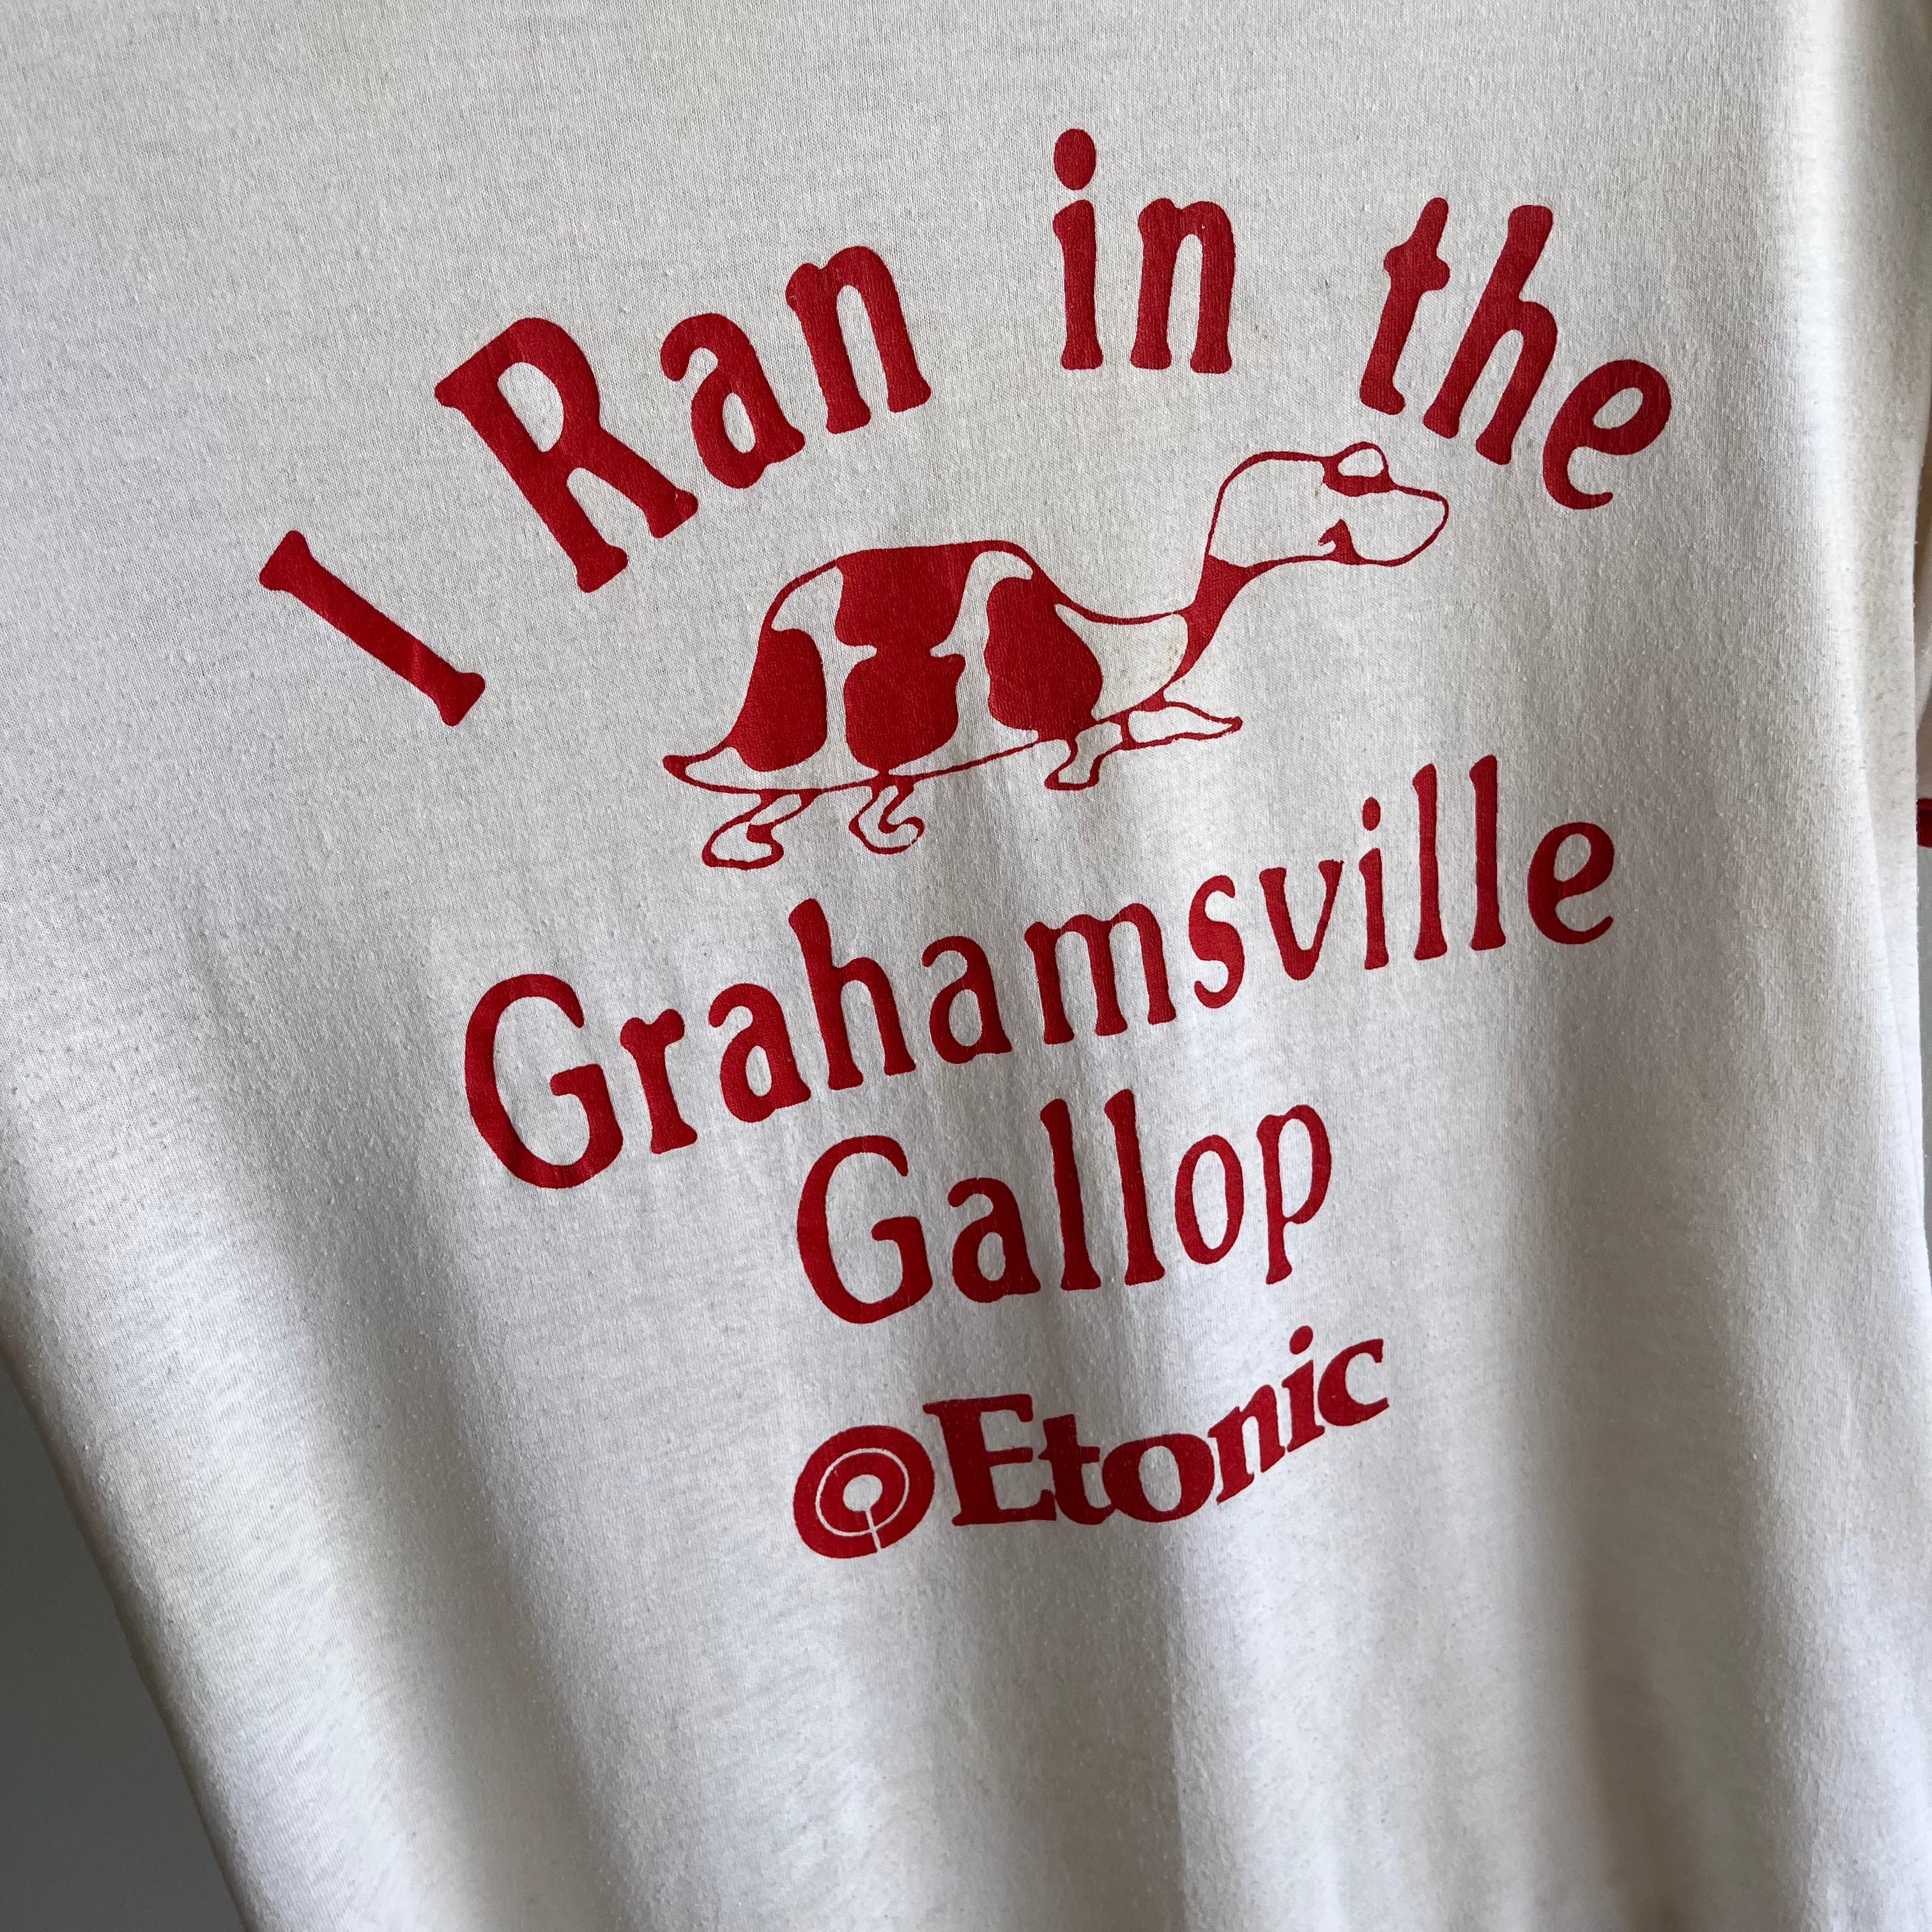 1980s I Ran The Grahamsville Gallop Screen Stars Ring T-Shirt